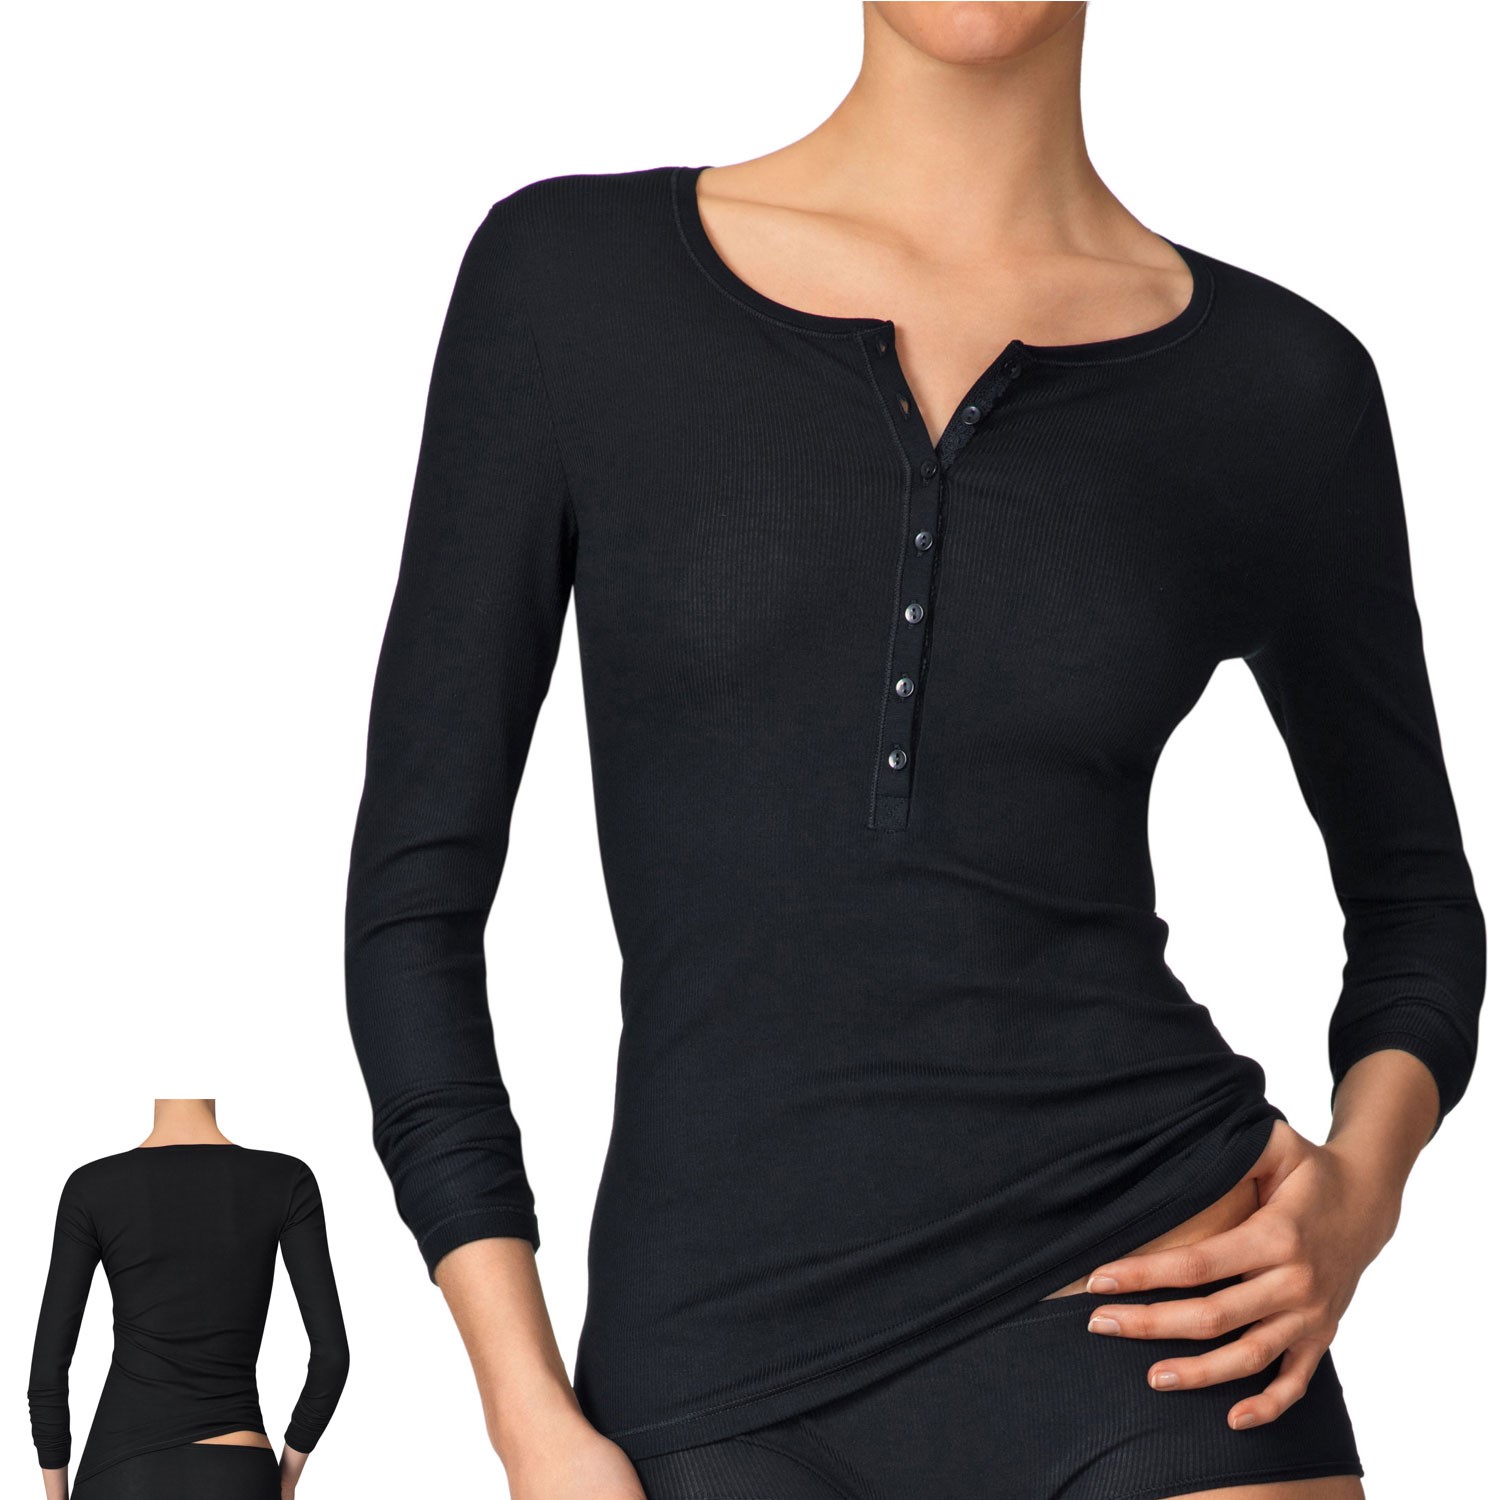 Calida Mood Long Sleeve Top Black - Tops/tanks - Clothing - Timarco.co.uk